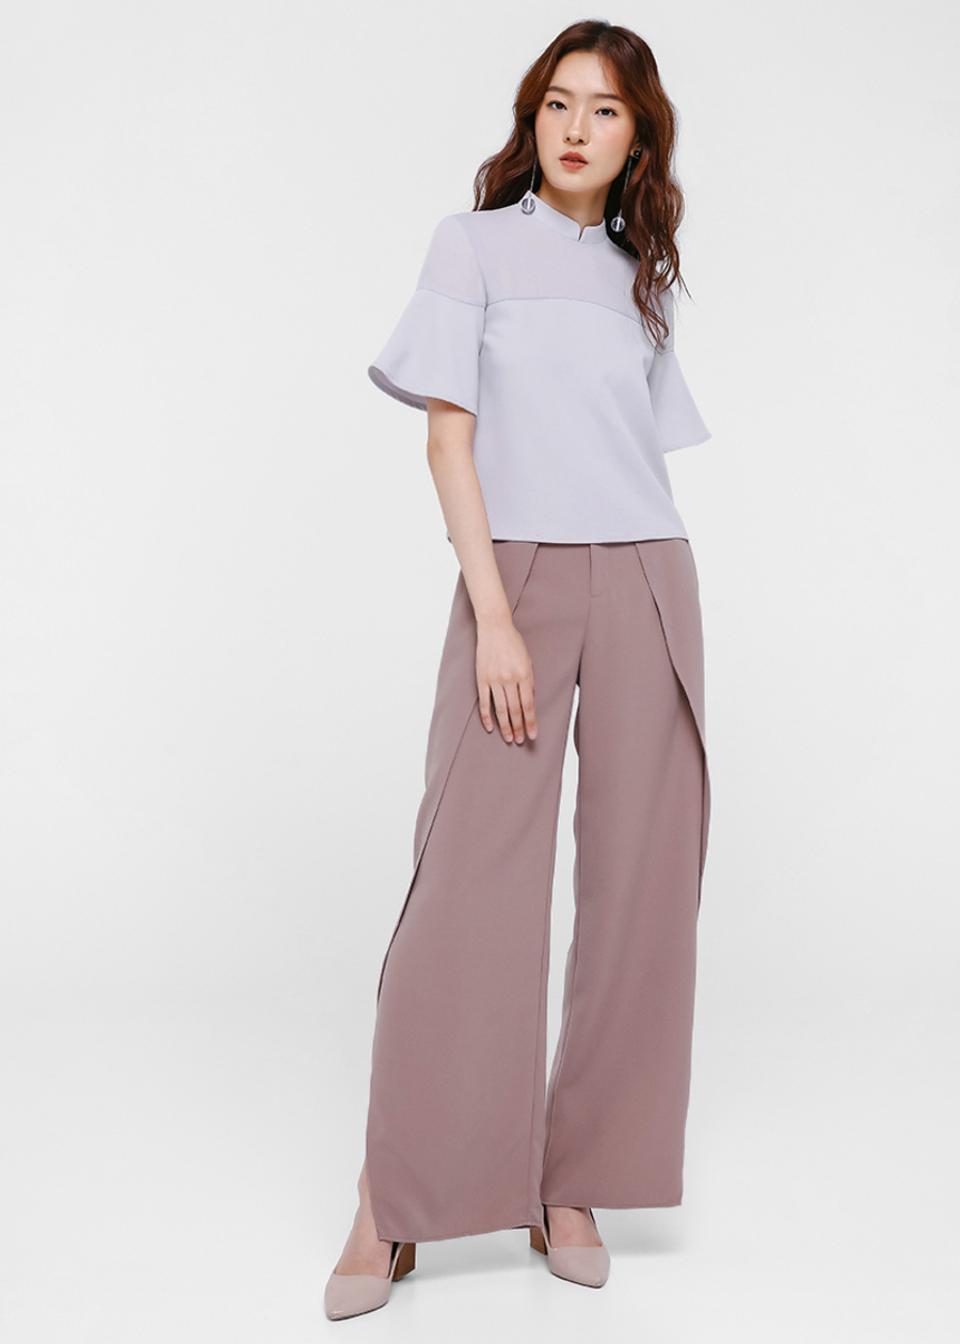 Buy Poccana Pants @ Love, Bonito Singapore | Shop Women's Fashion Online